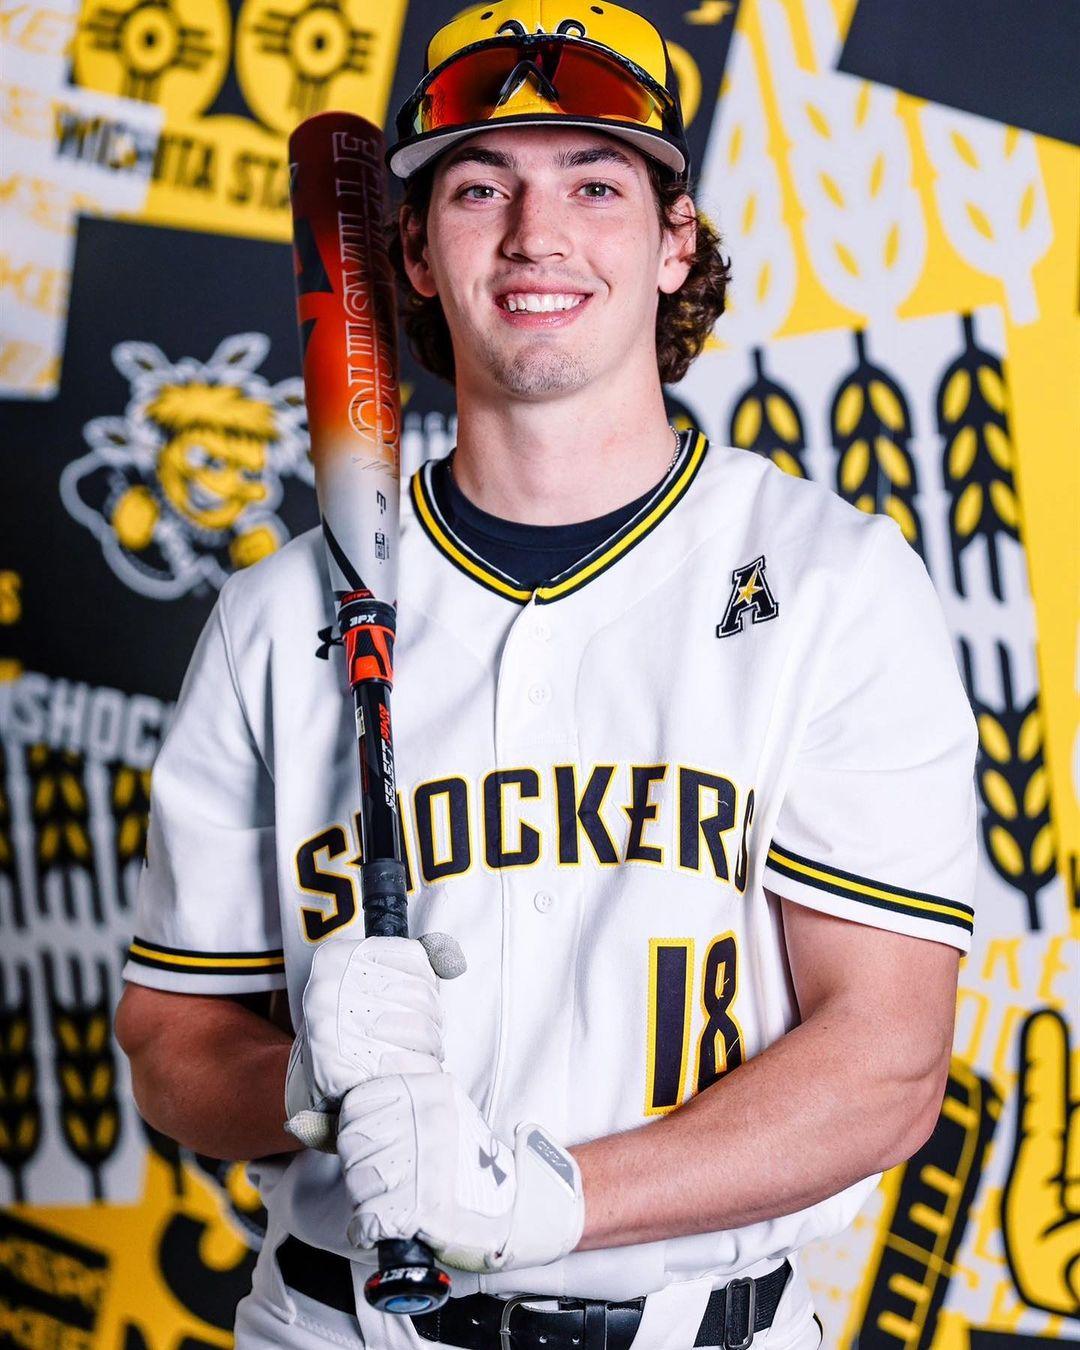 Jordan Rogers - Baseball - Wichita State Athletics